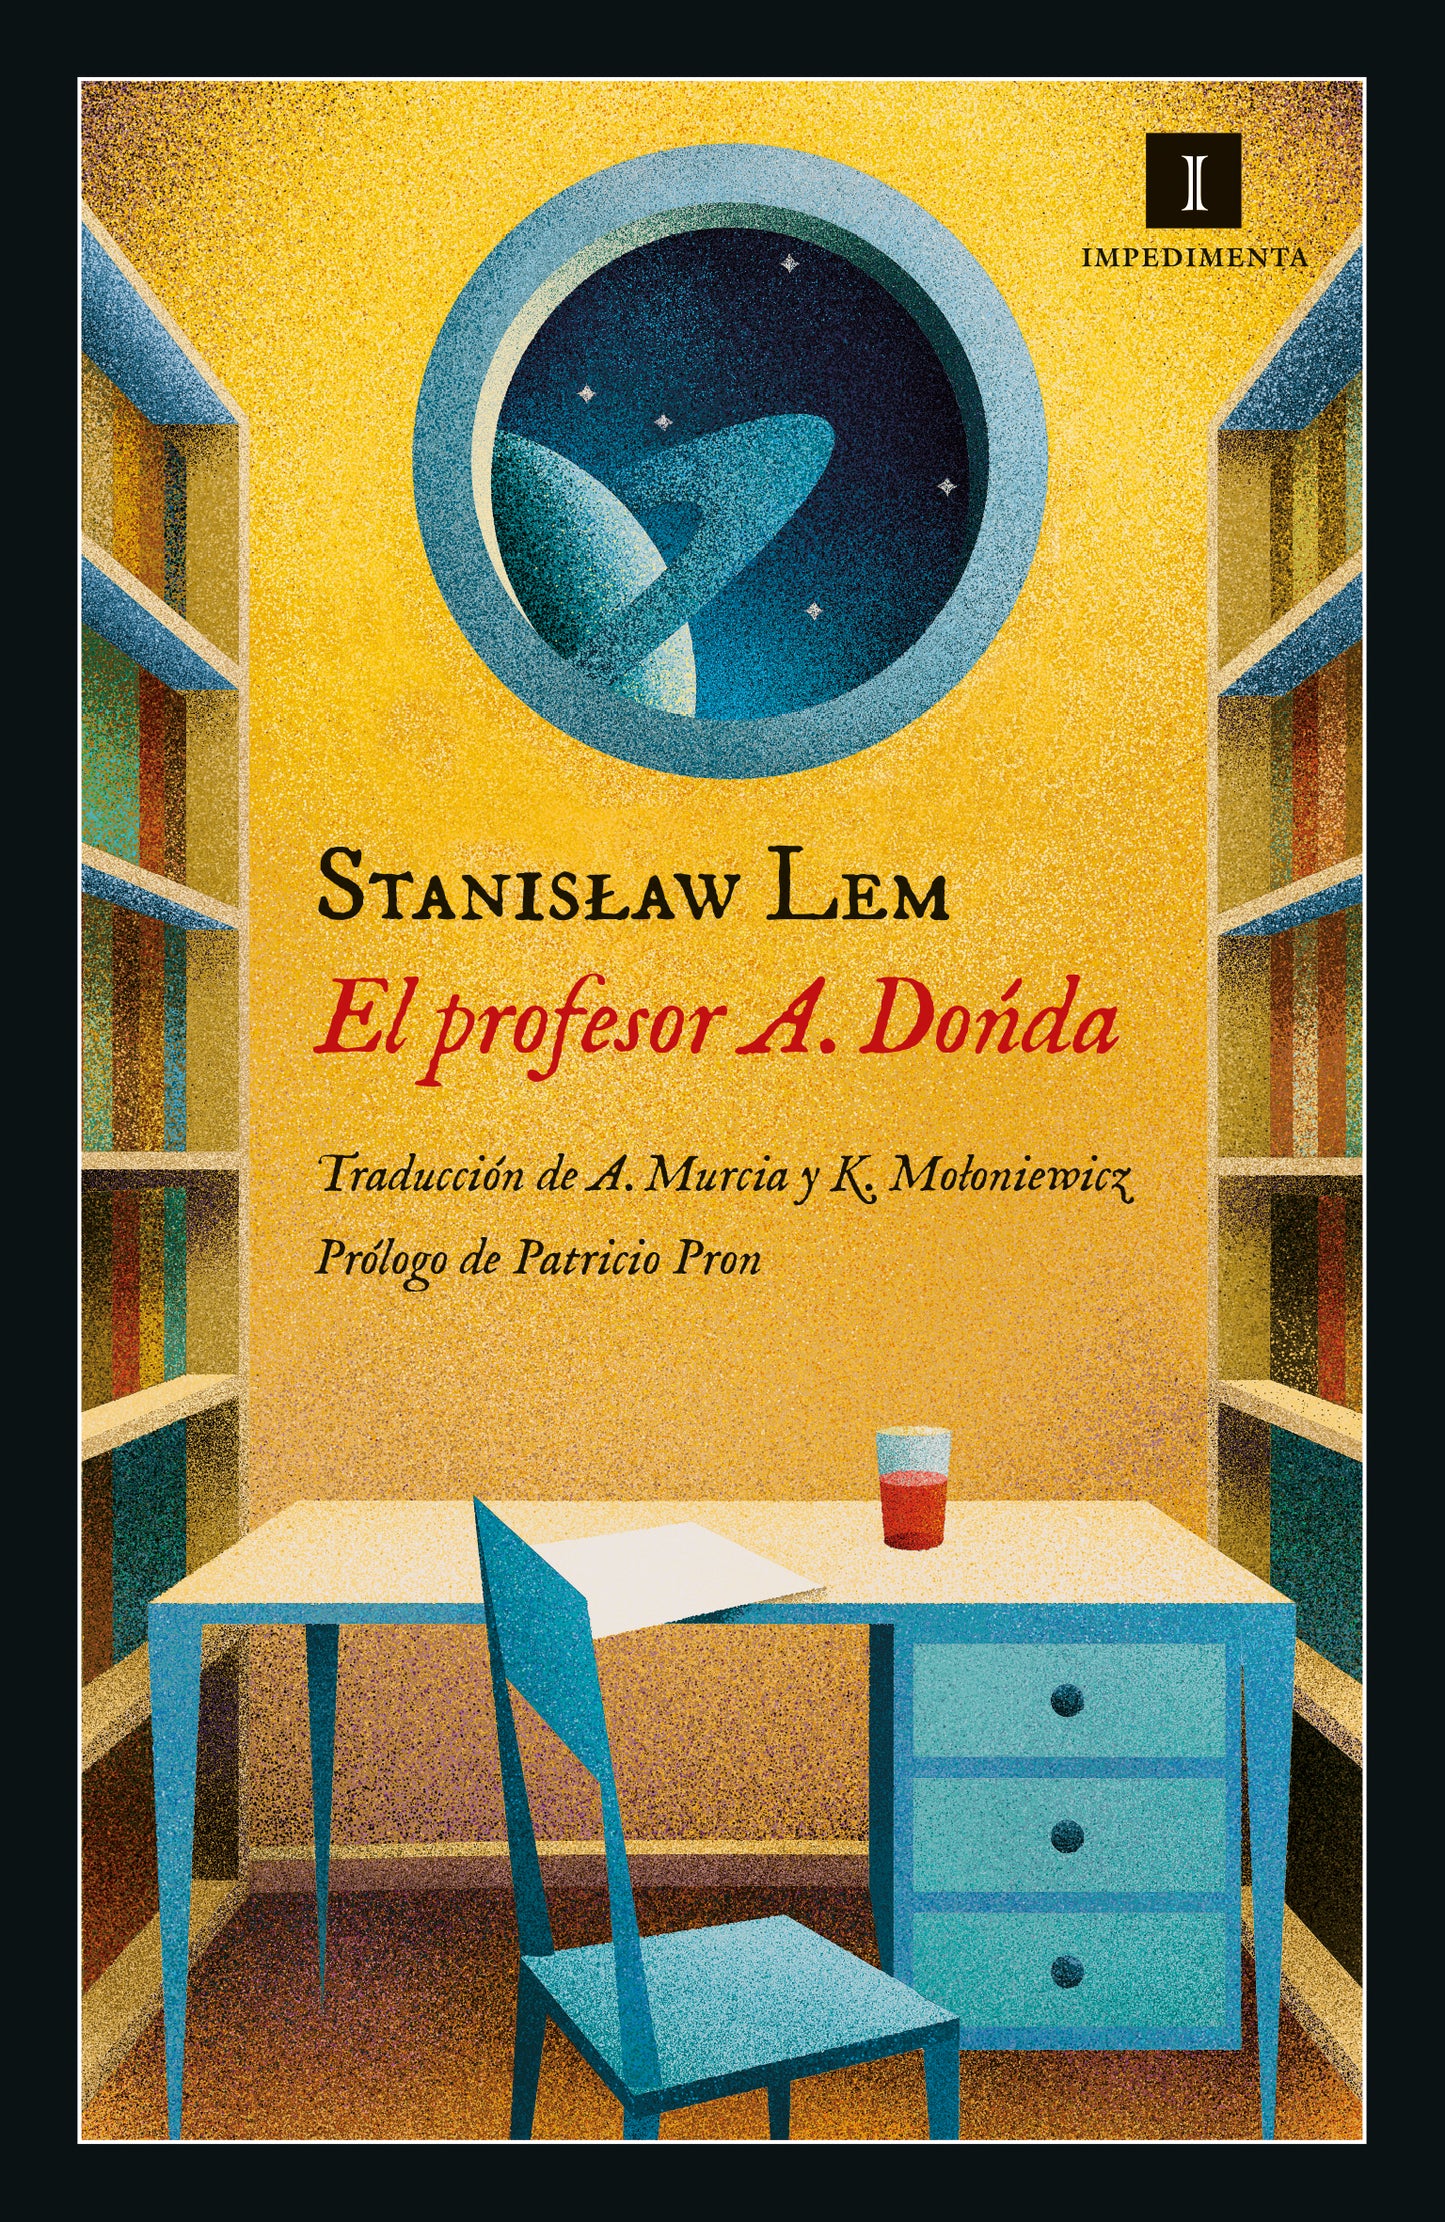 El profesor A. Dońda - Stanisław Lem